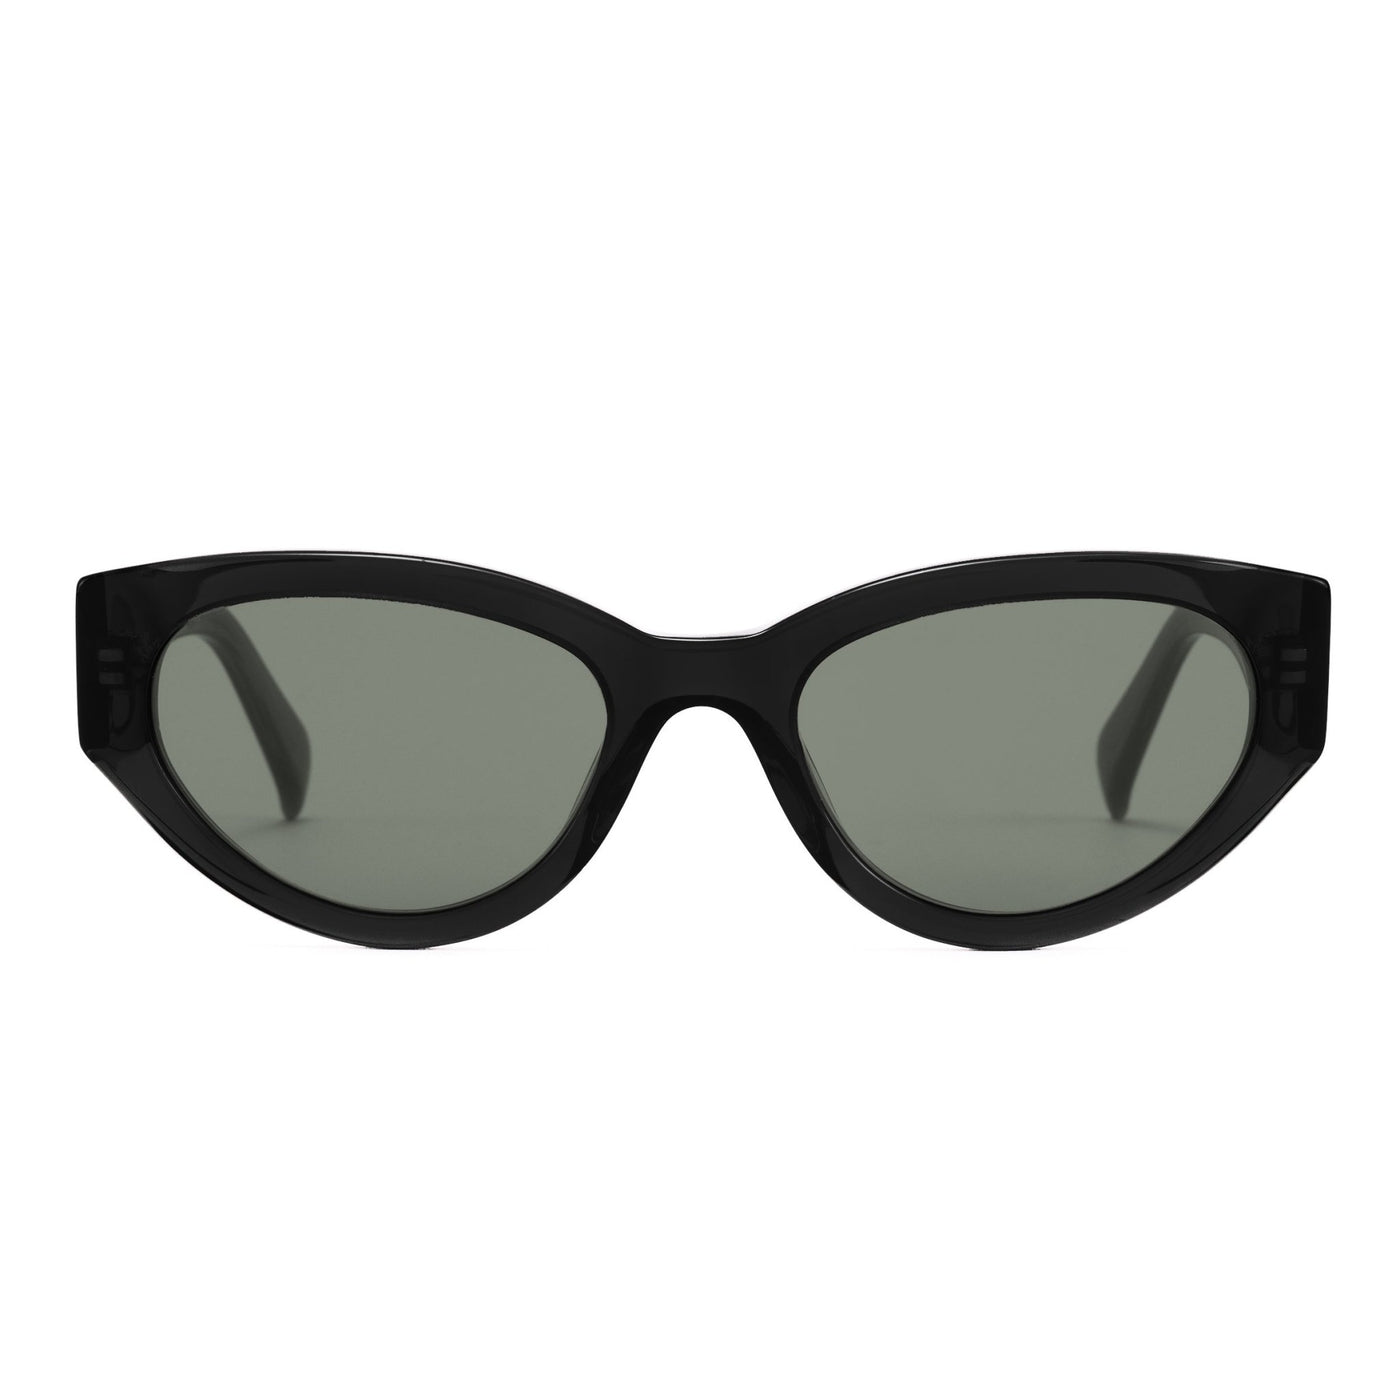 Black OTIS eyewear sunglasses facing forward